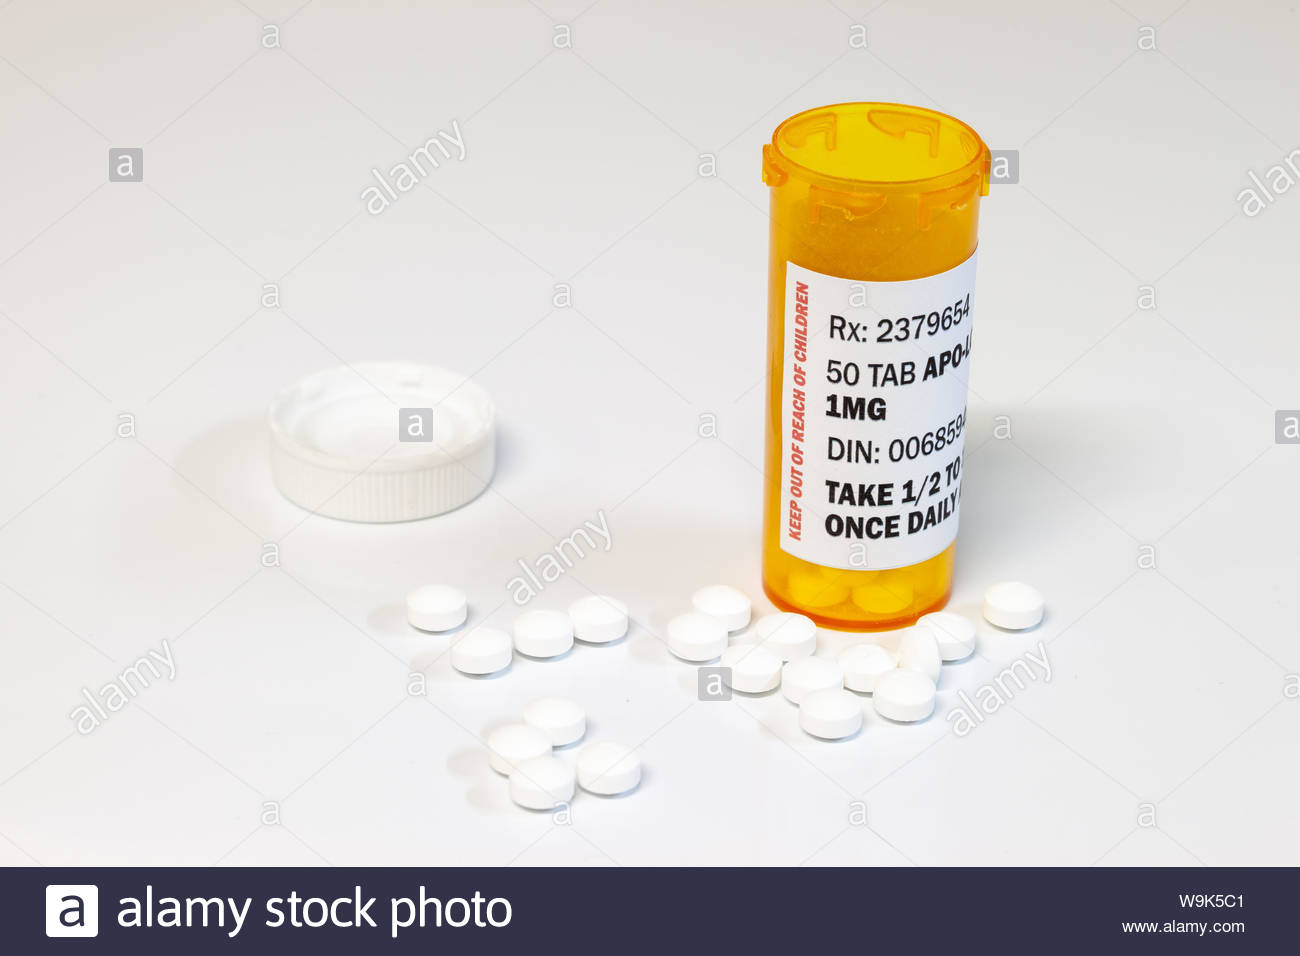 Prescription Bottle With Lorezapam On A White Background